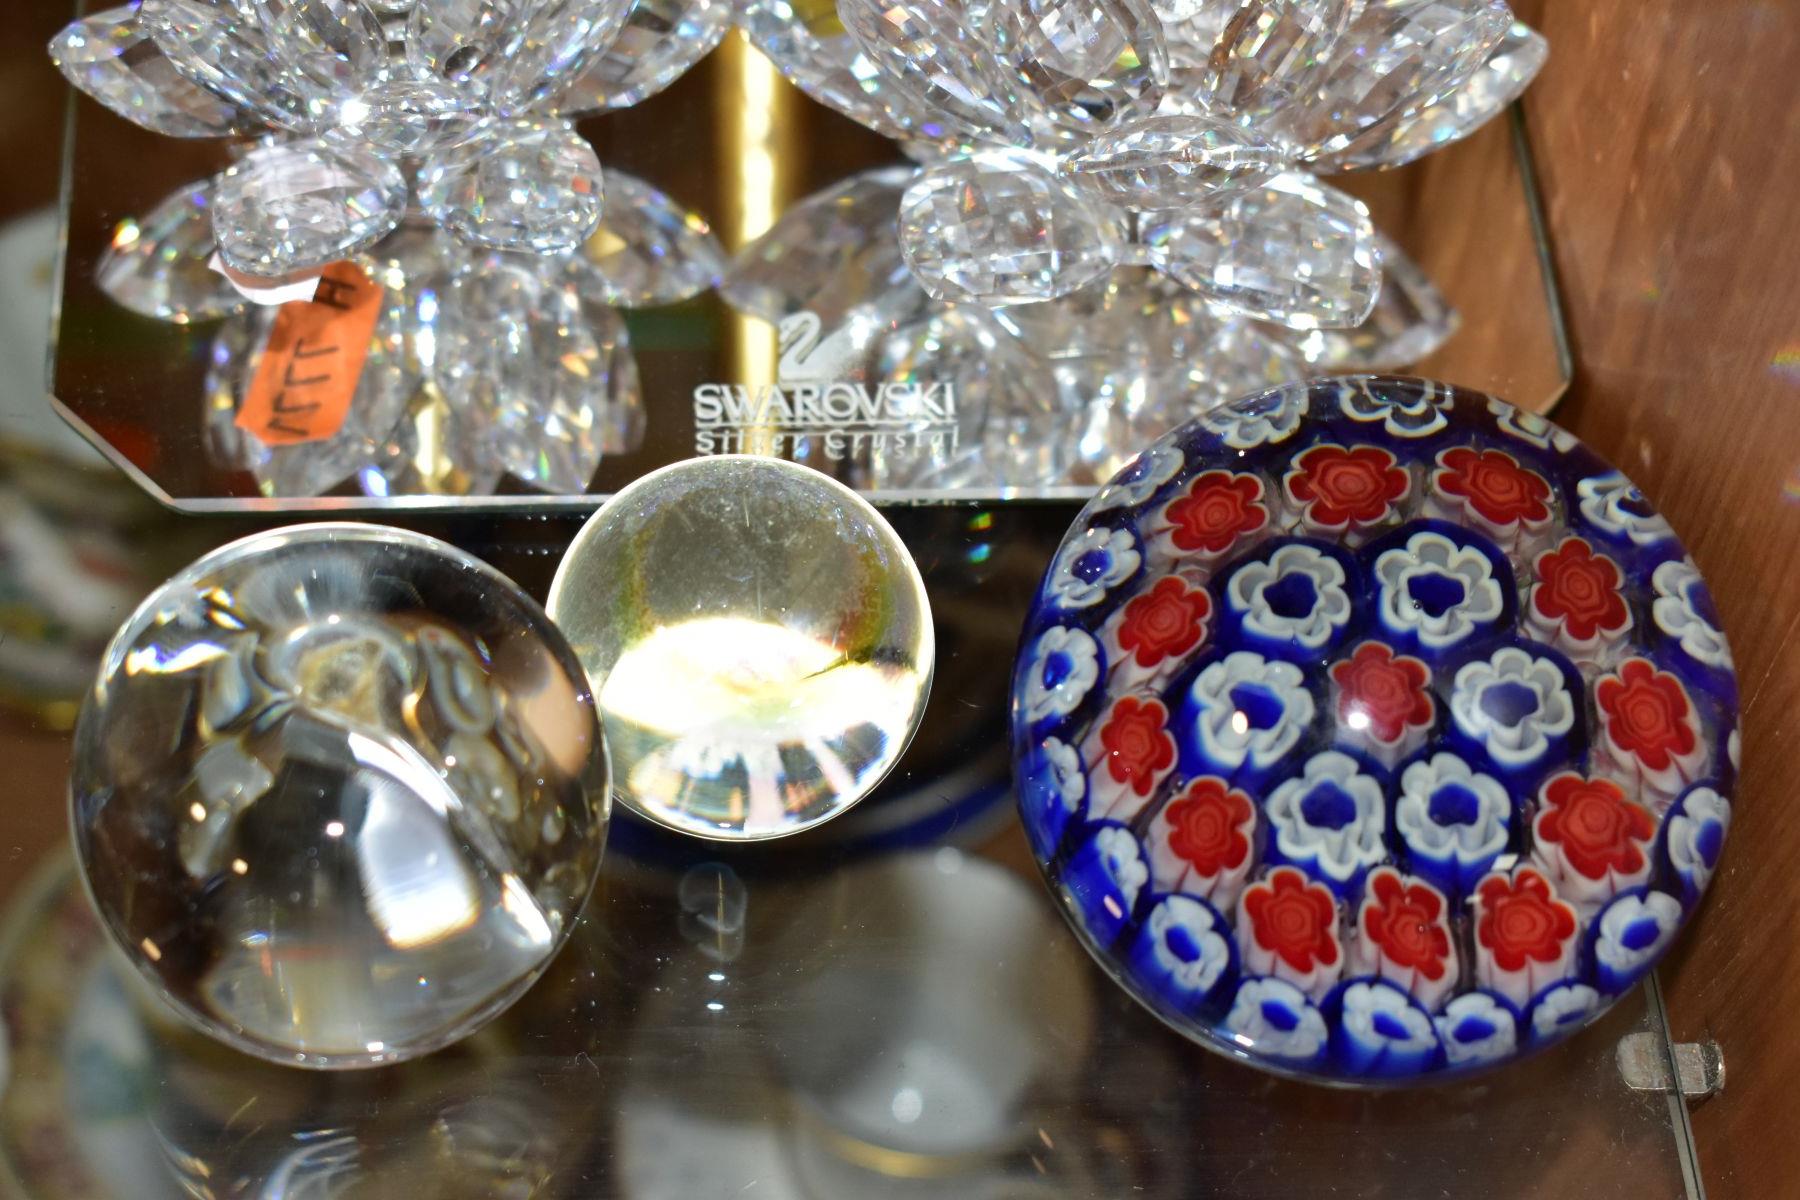 THREE SWAROVSKI CRYSTAL CANDLEHOLDERS AND THREE GLASS PAPERWEIGHTS, comprising three Swarovski Water - Bild 2 aus 5